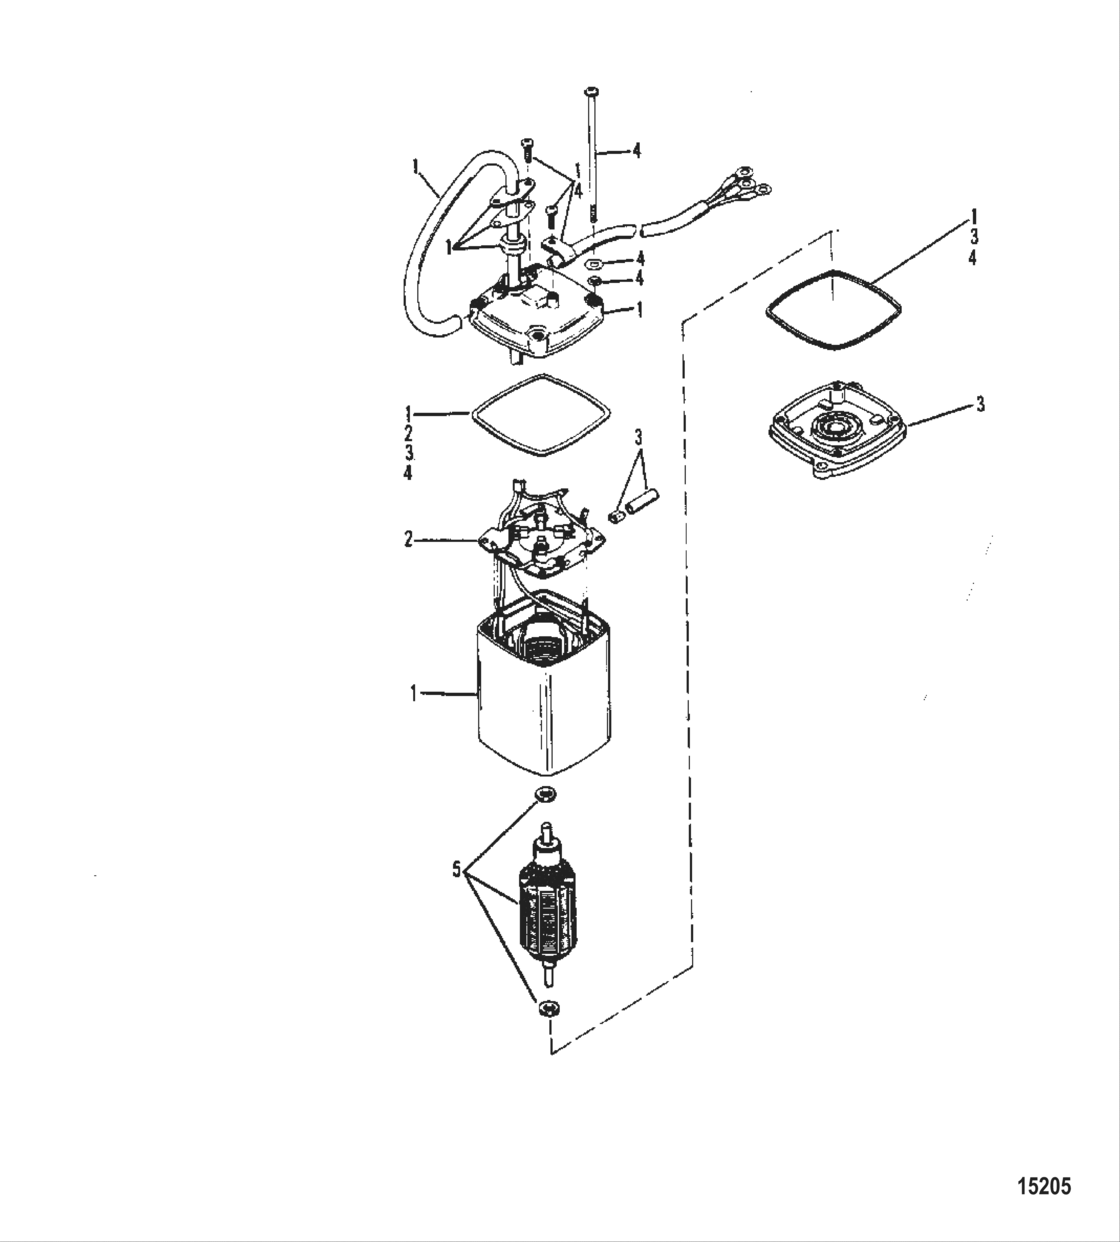 Power Trim Motor